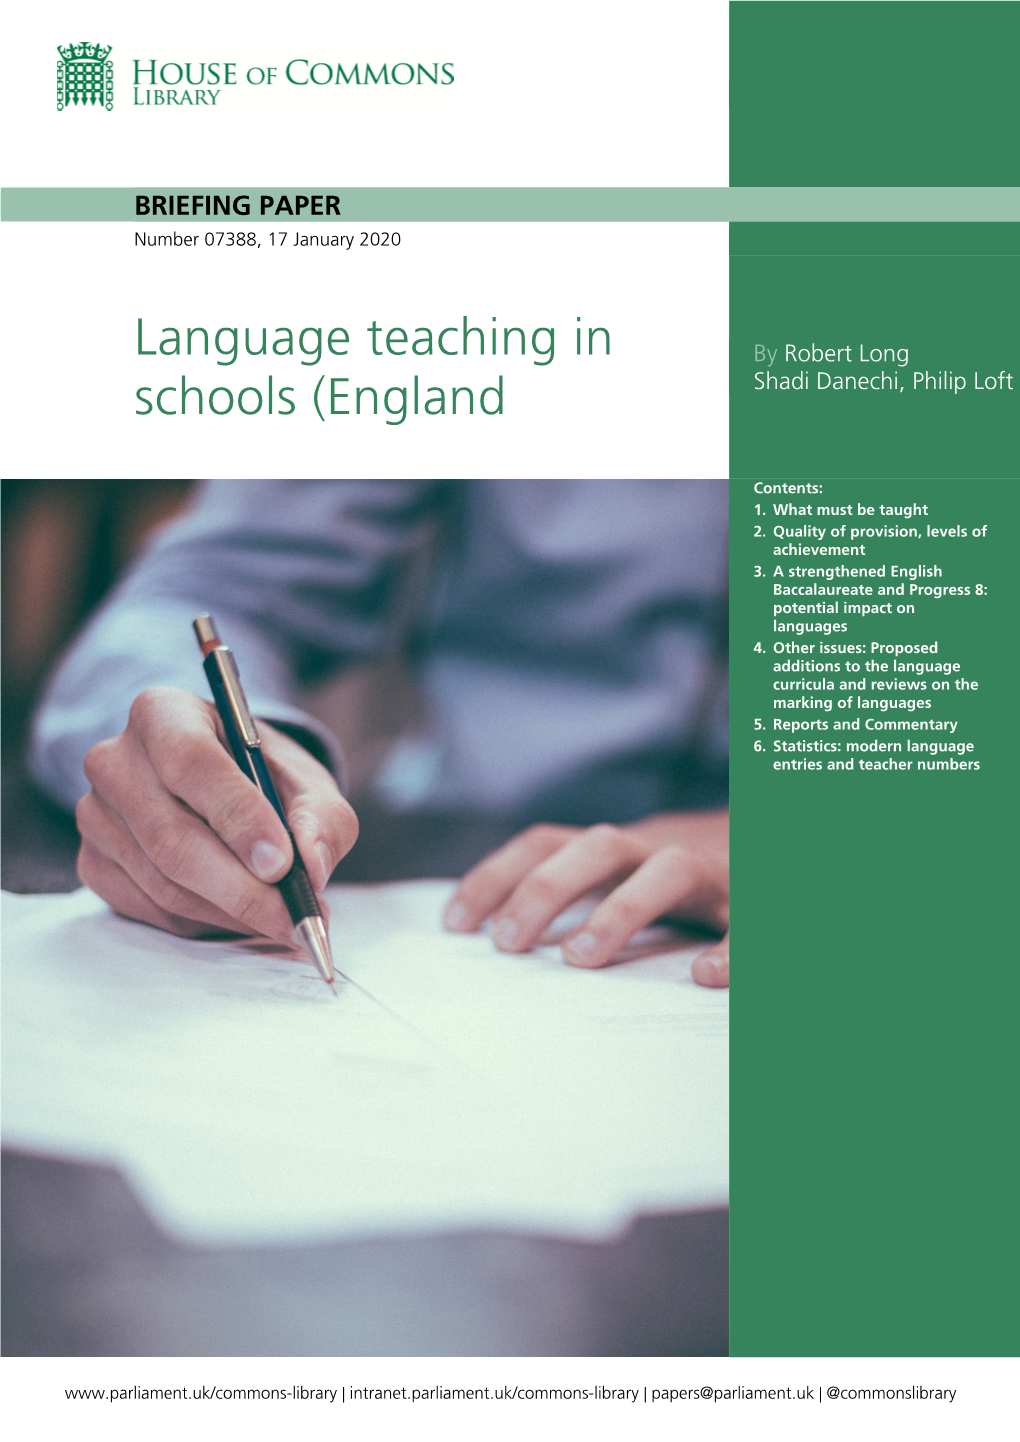 Language Teaching in Schools (England)